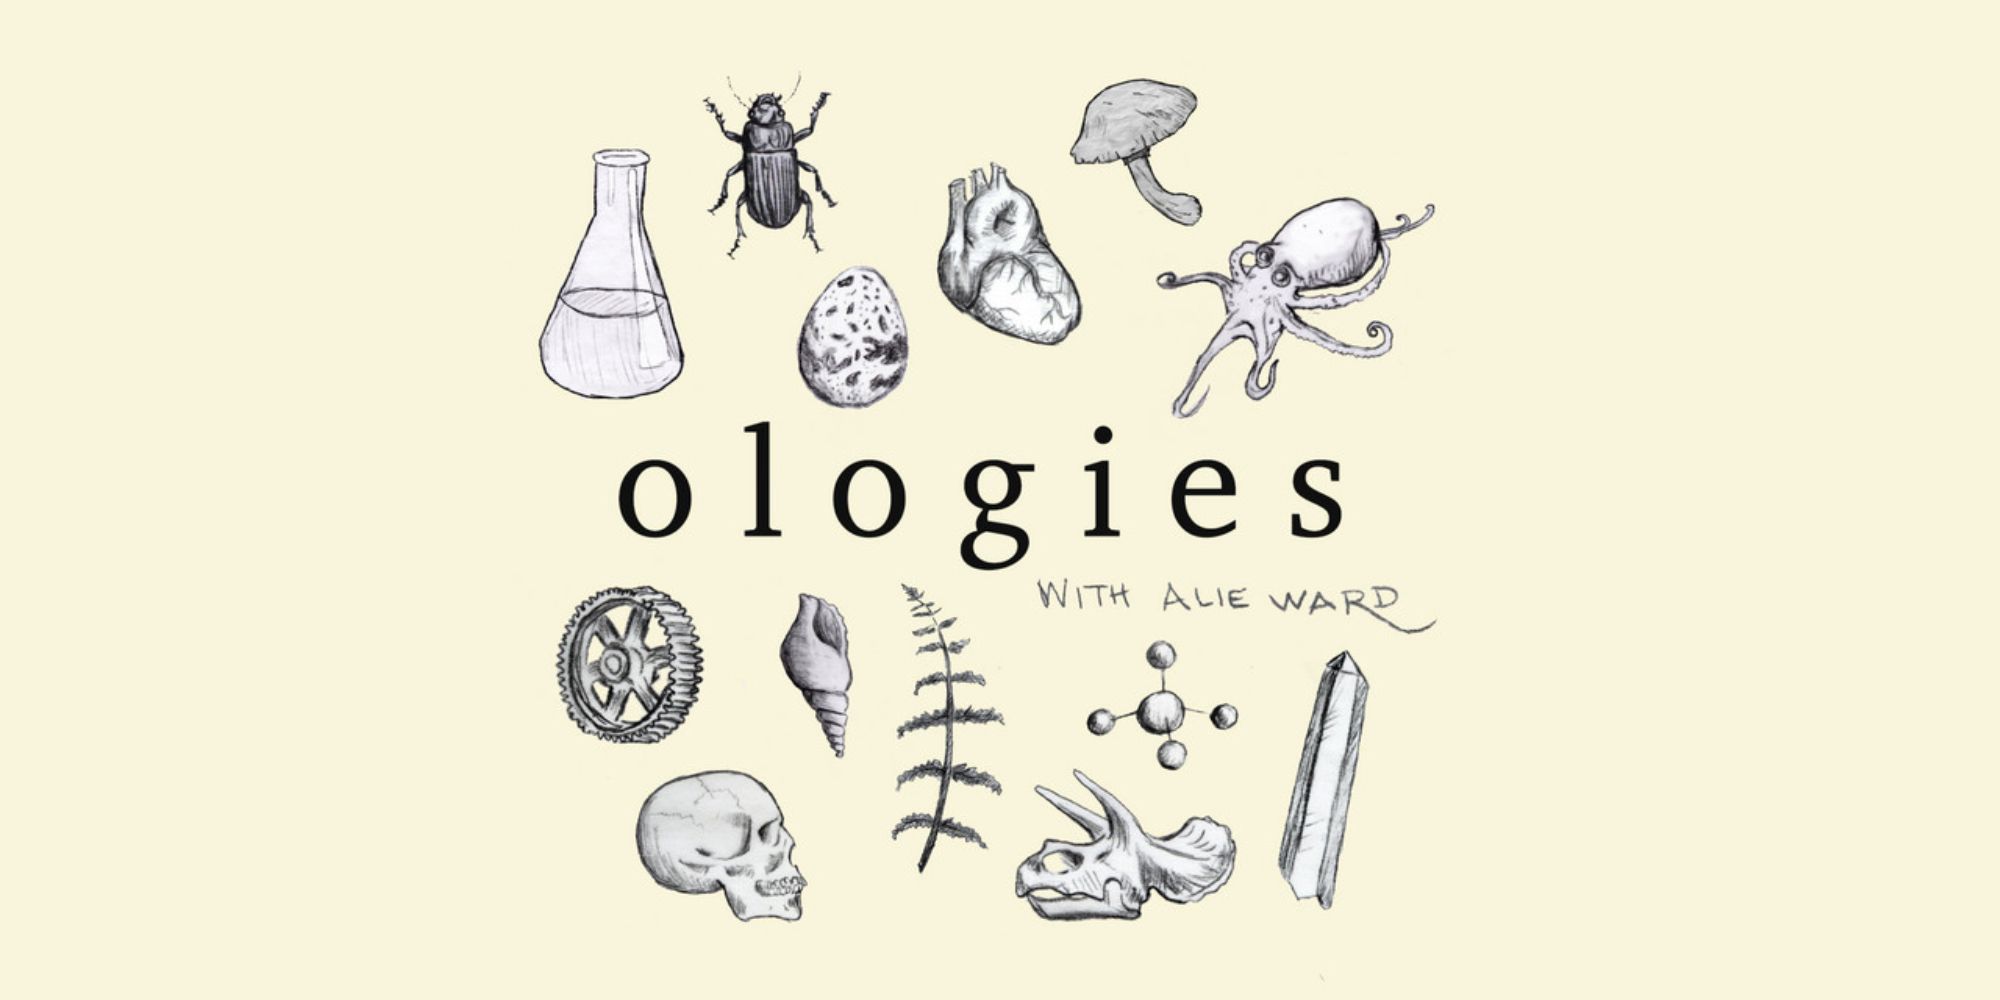 Ologies with Alie Ward key art